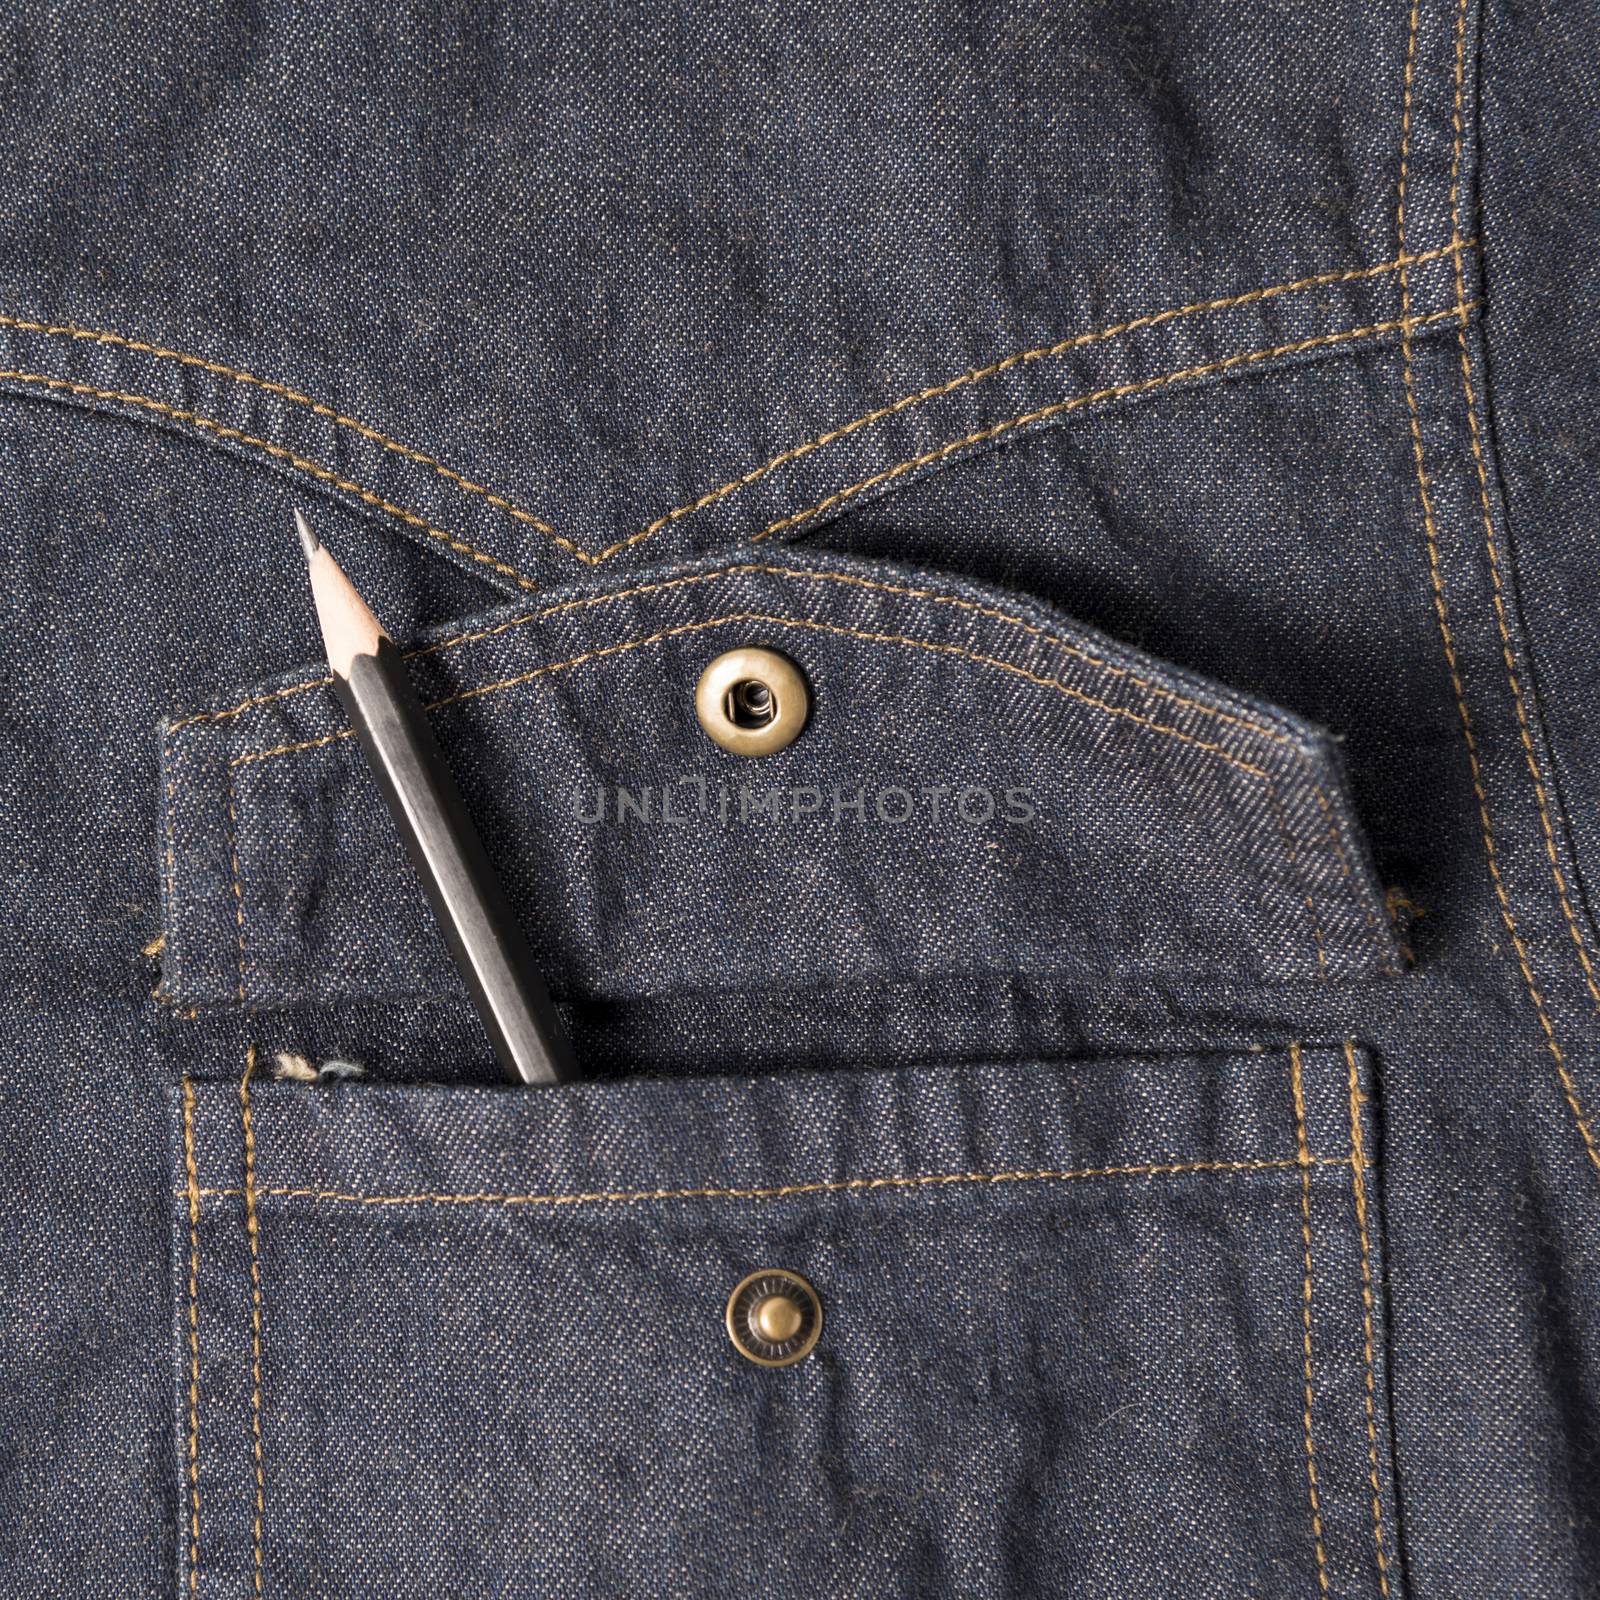 pencil in jean pocket